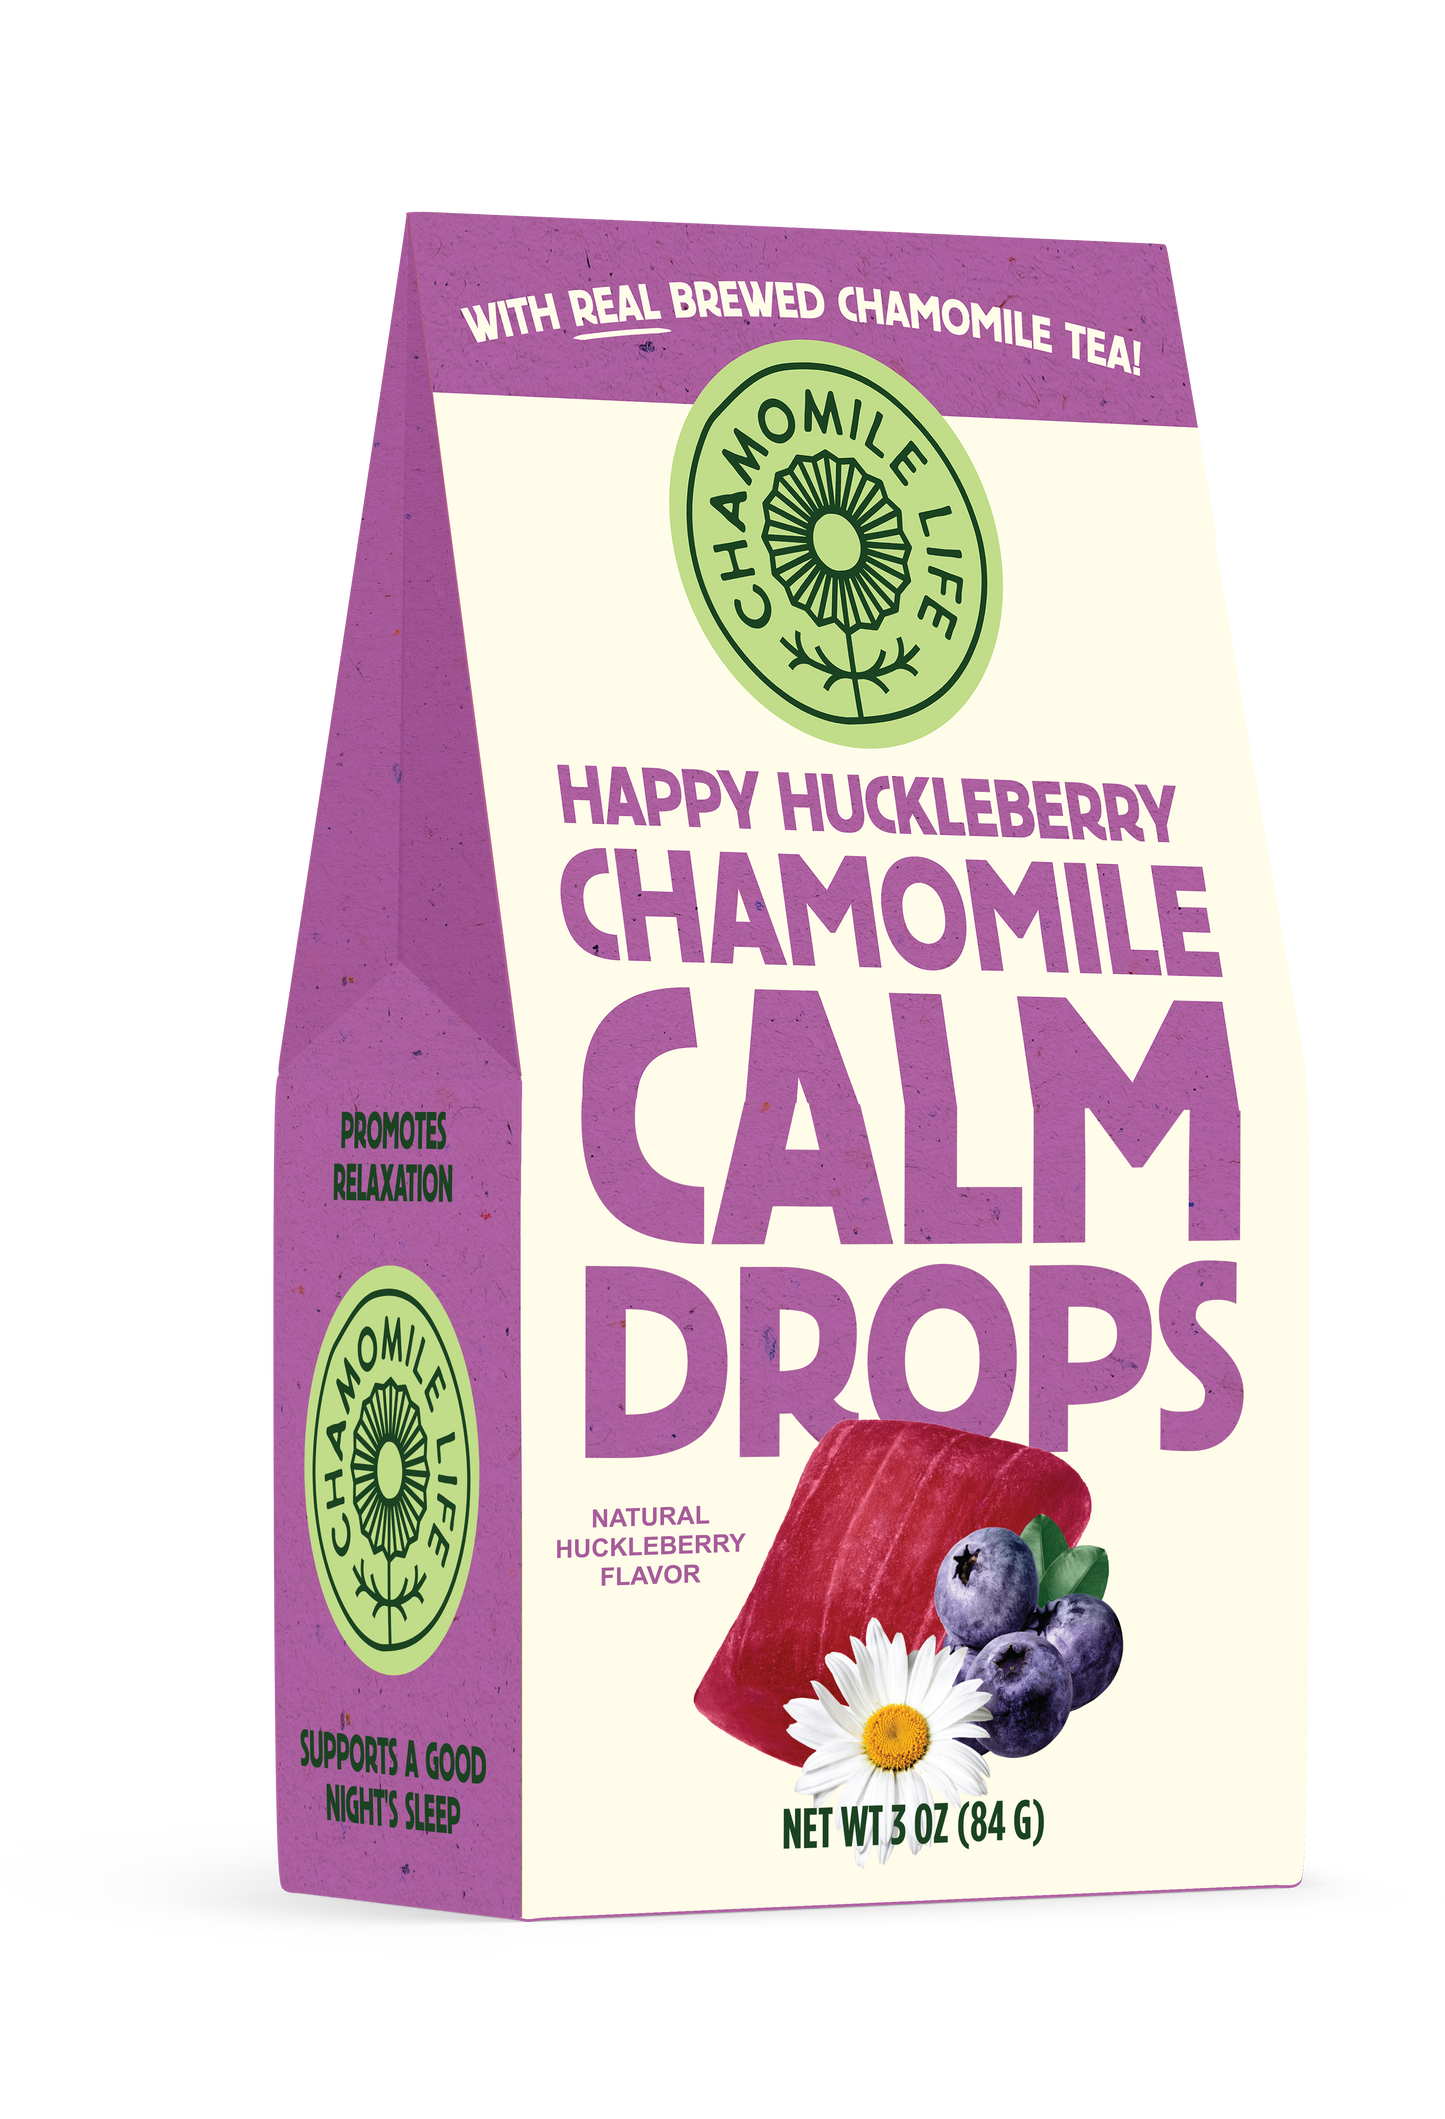 Chamomile Life Happy Huckleberry Chamomile Calm Drops